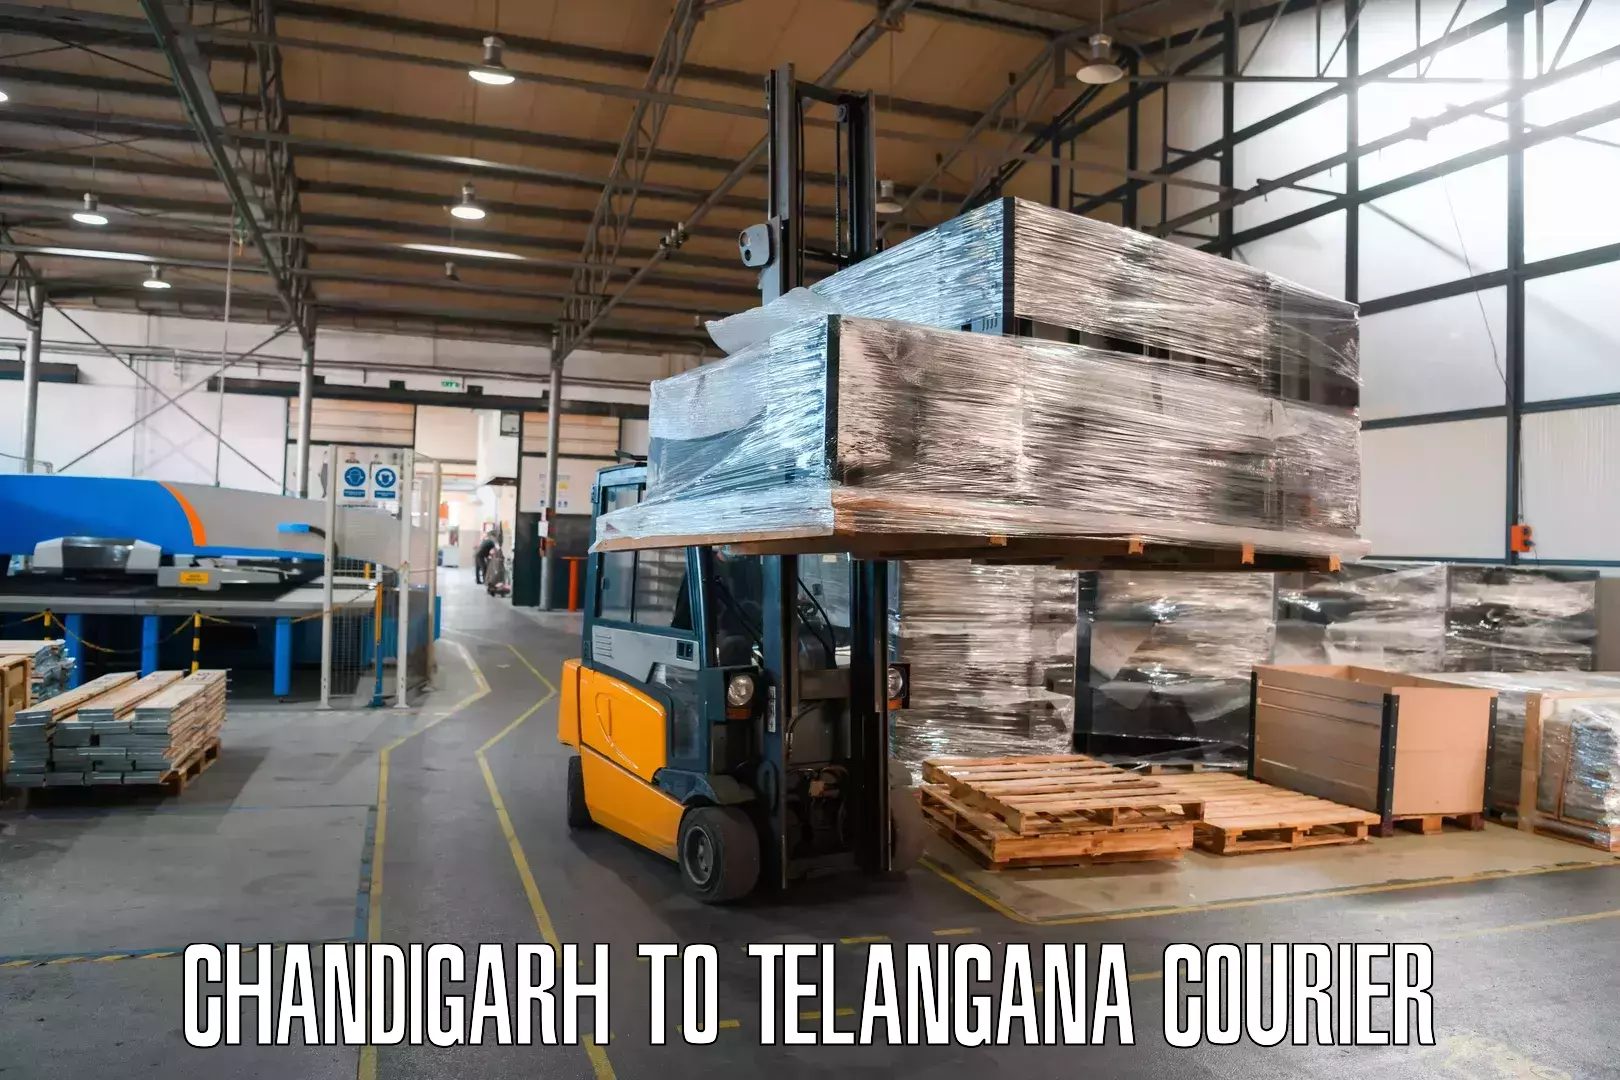 Customer-focused courier Chandigarh to Manneguda